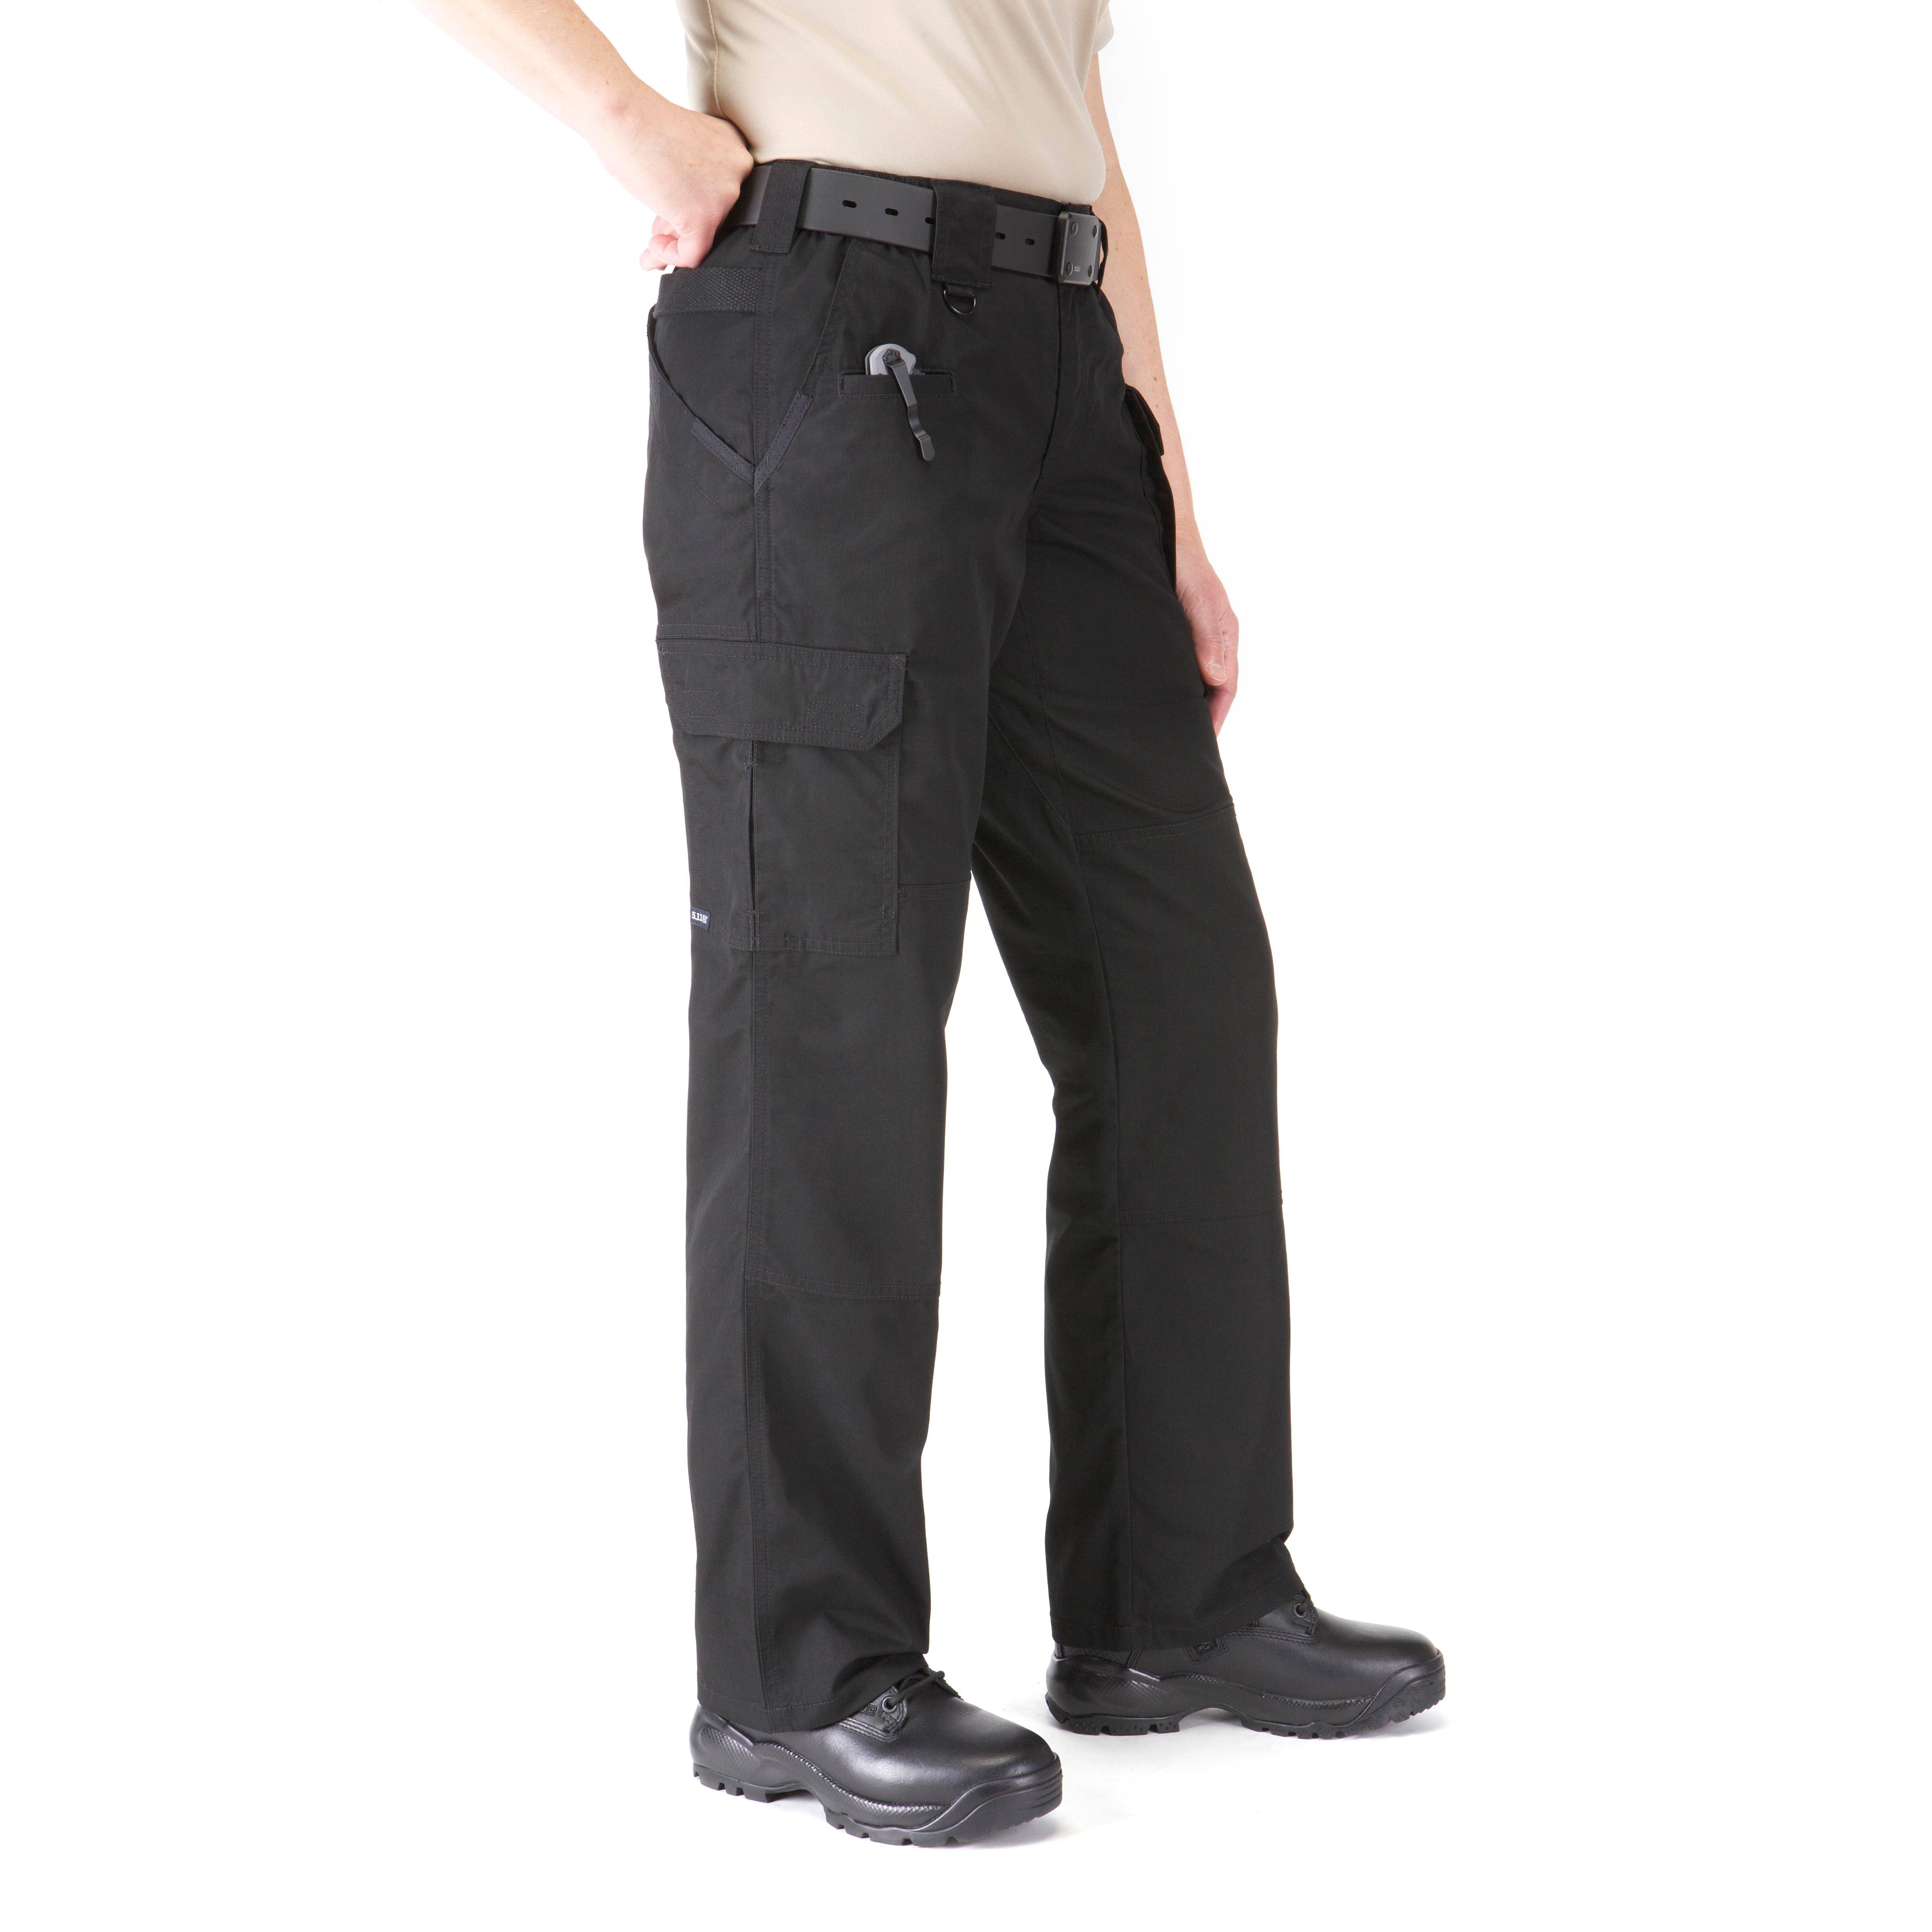 Women's TACLITE EMS Pant: Durable & Functional